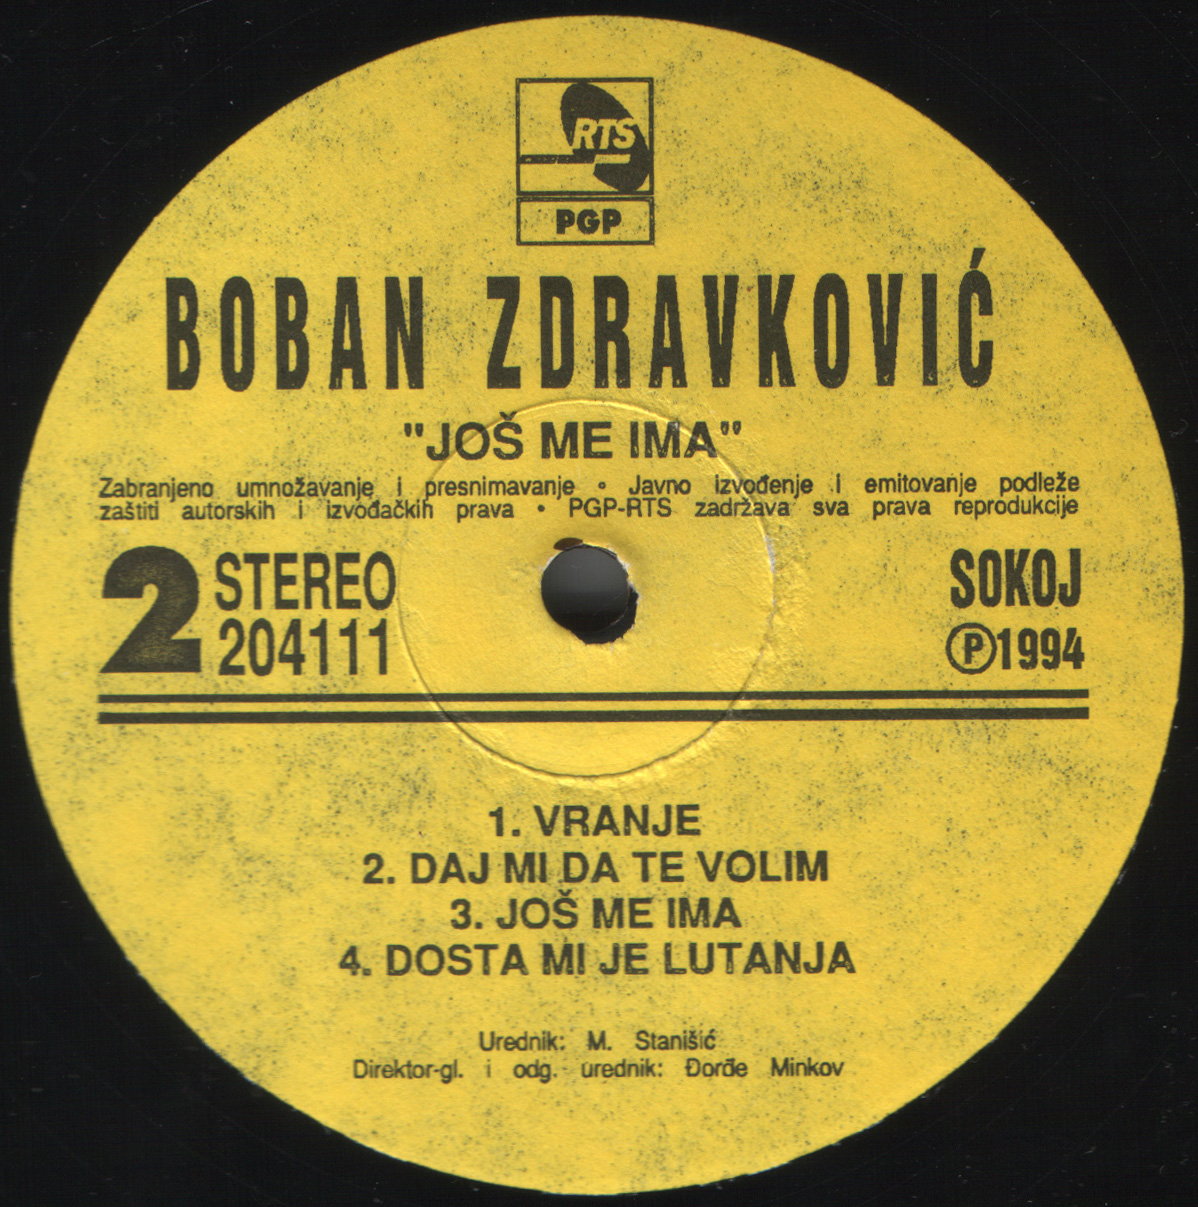 Boban Zdravkovic 1994 B